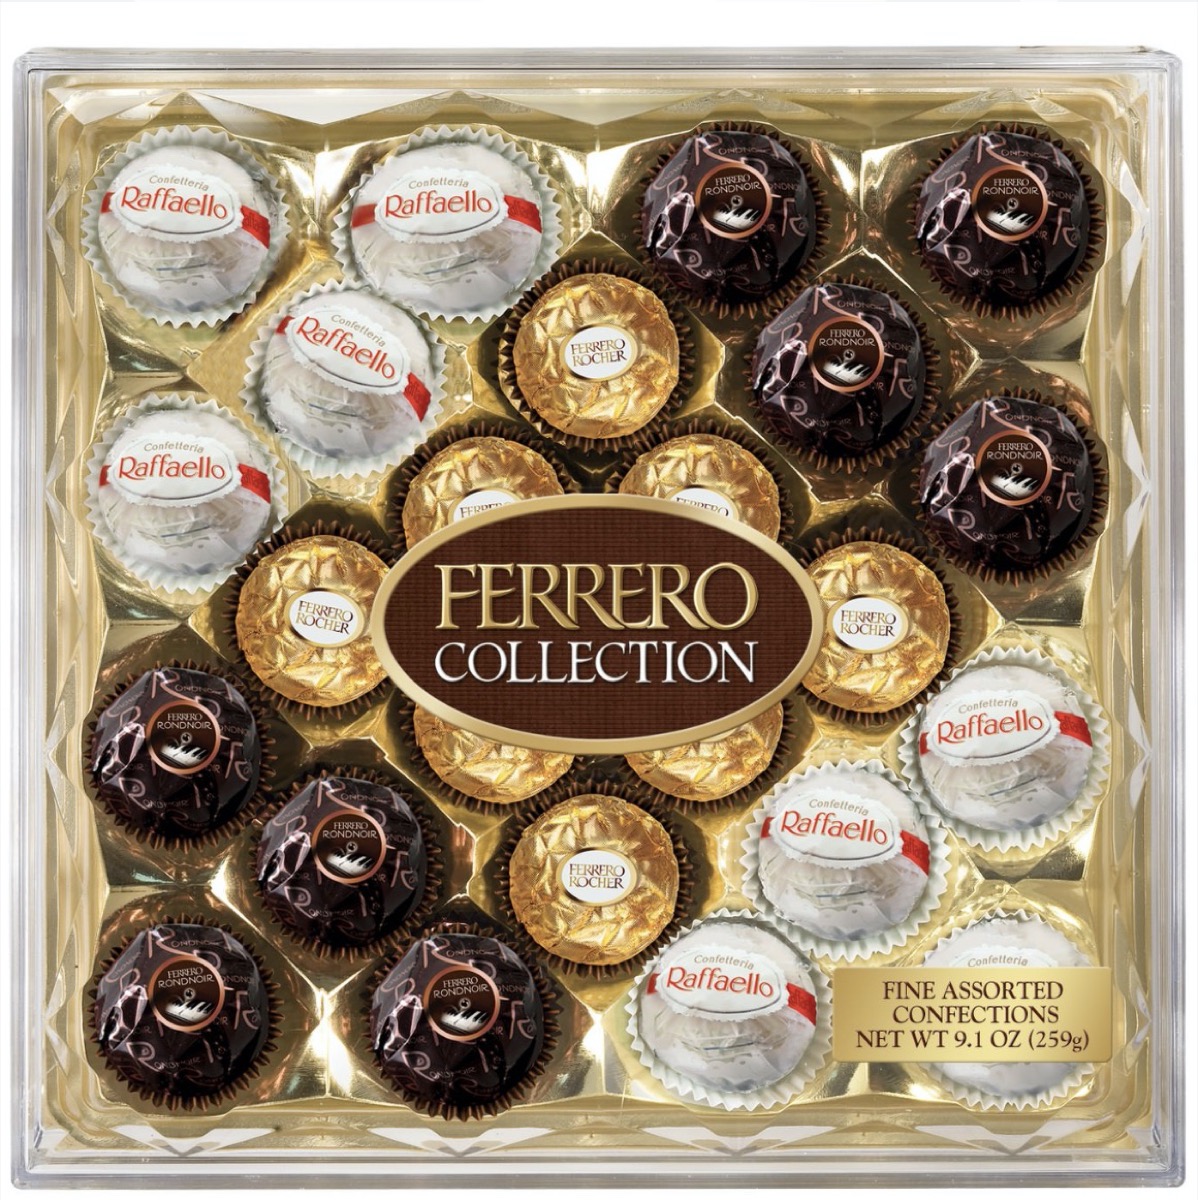 collection of Ferro Rocher chocolates